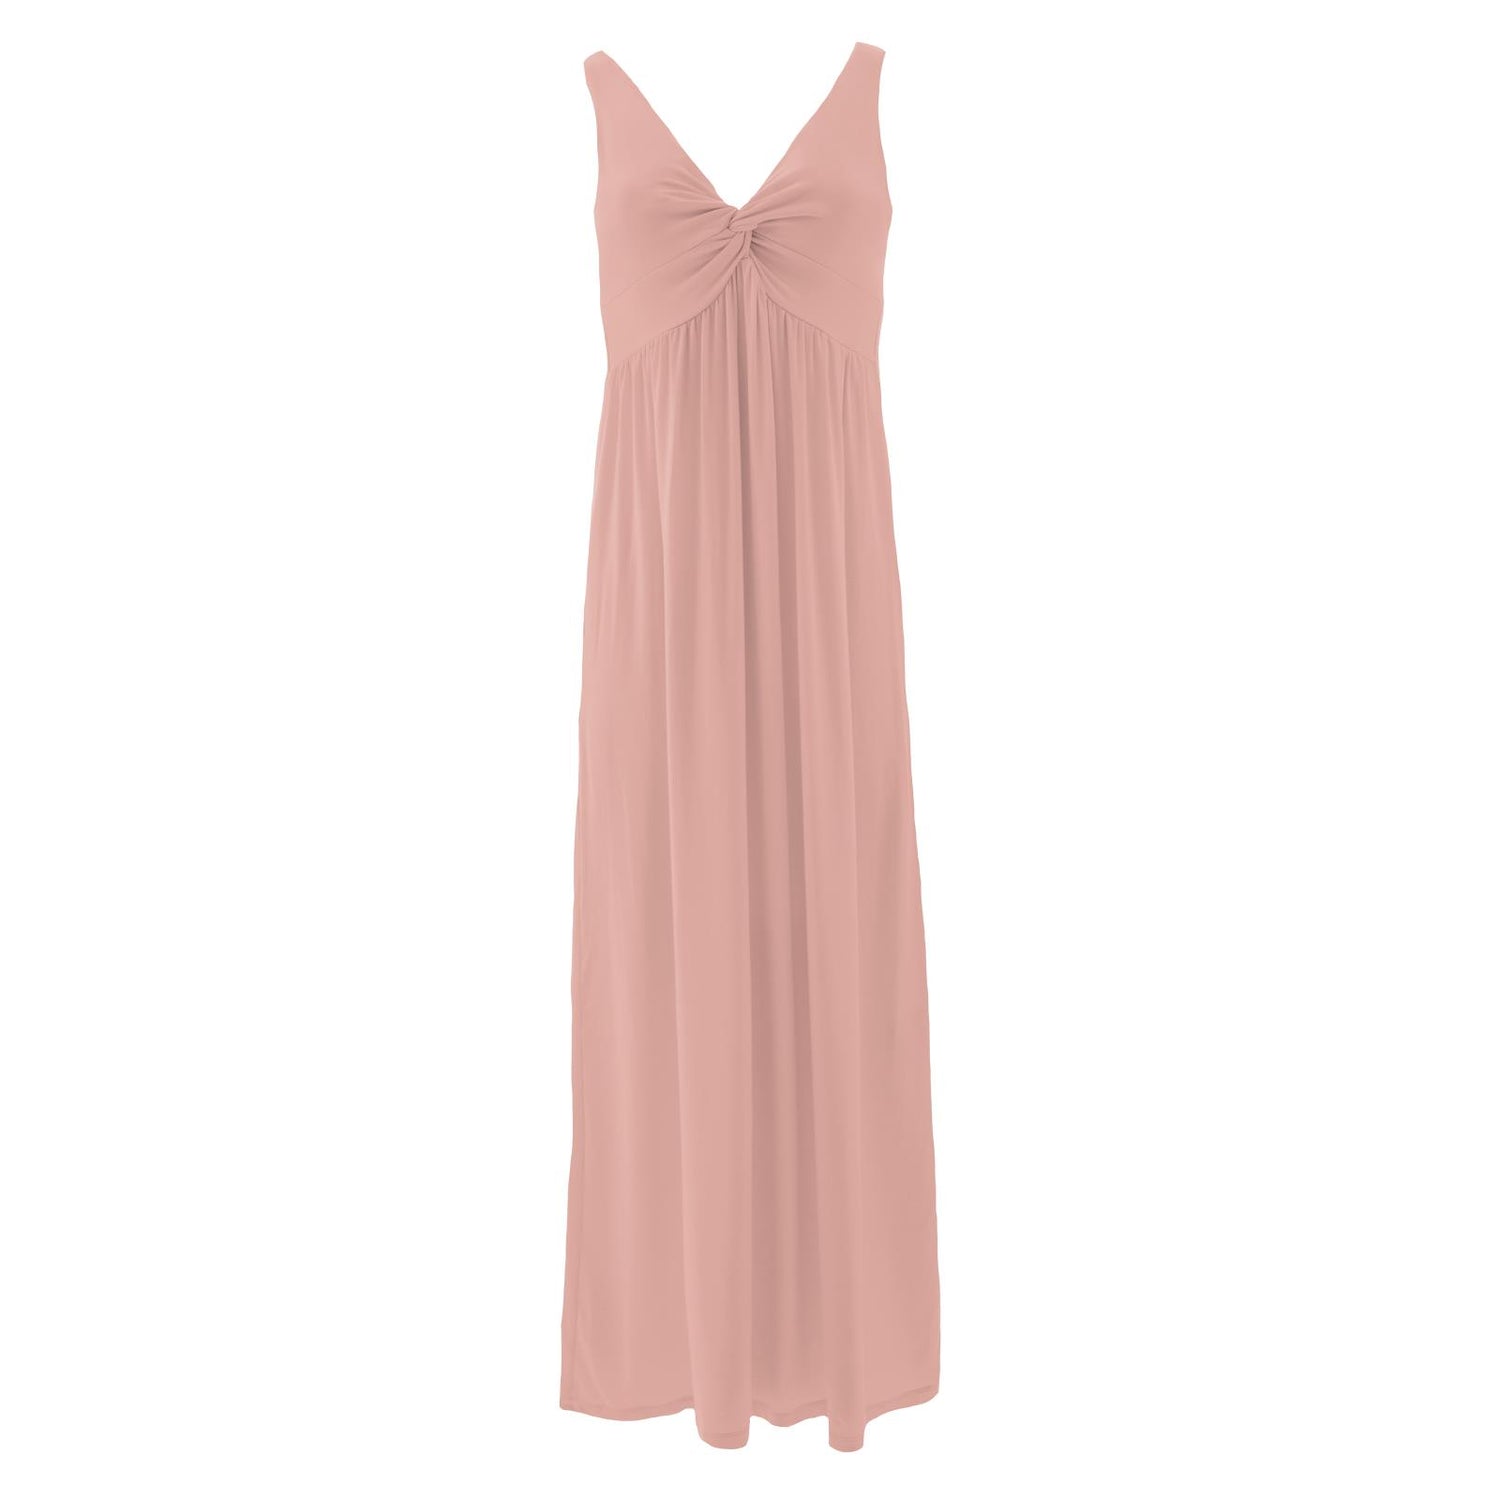 Women's Simple Twist Nightgown in Blush